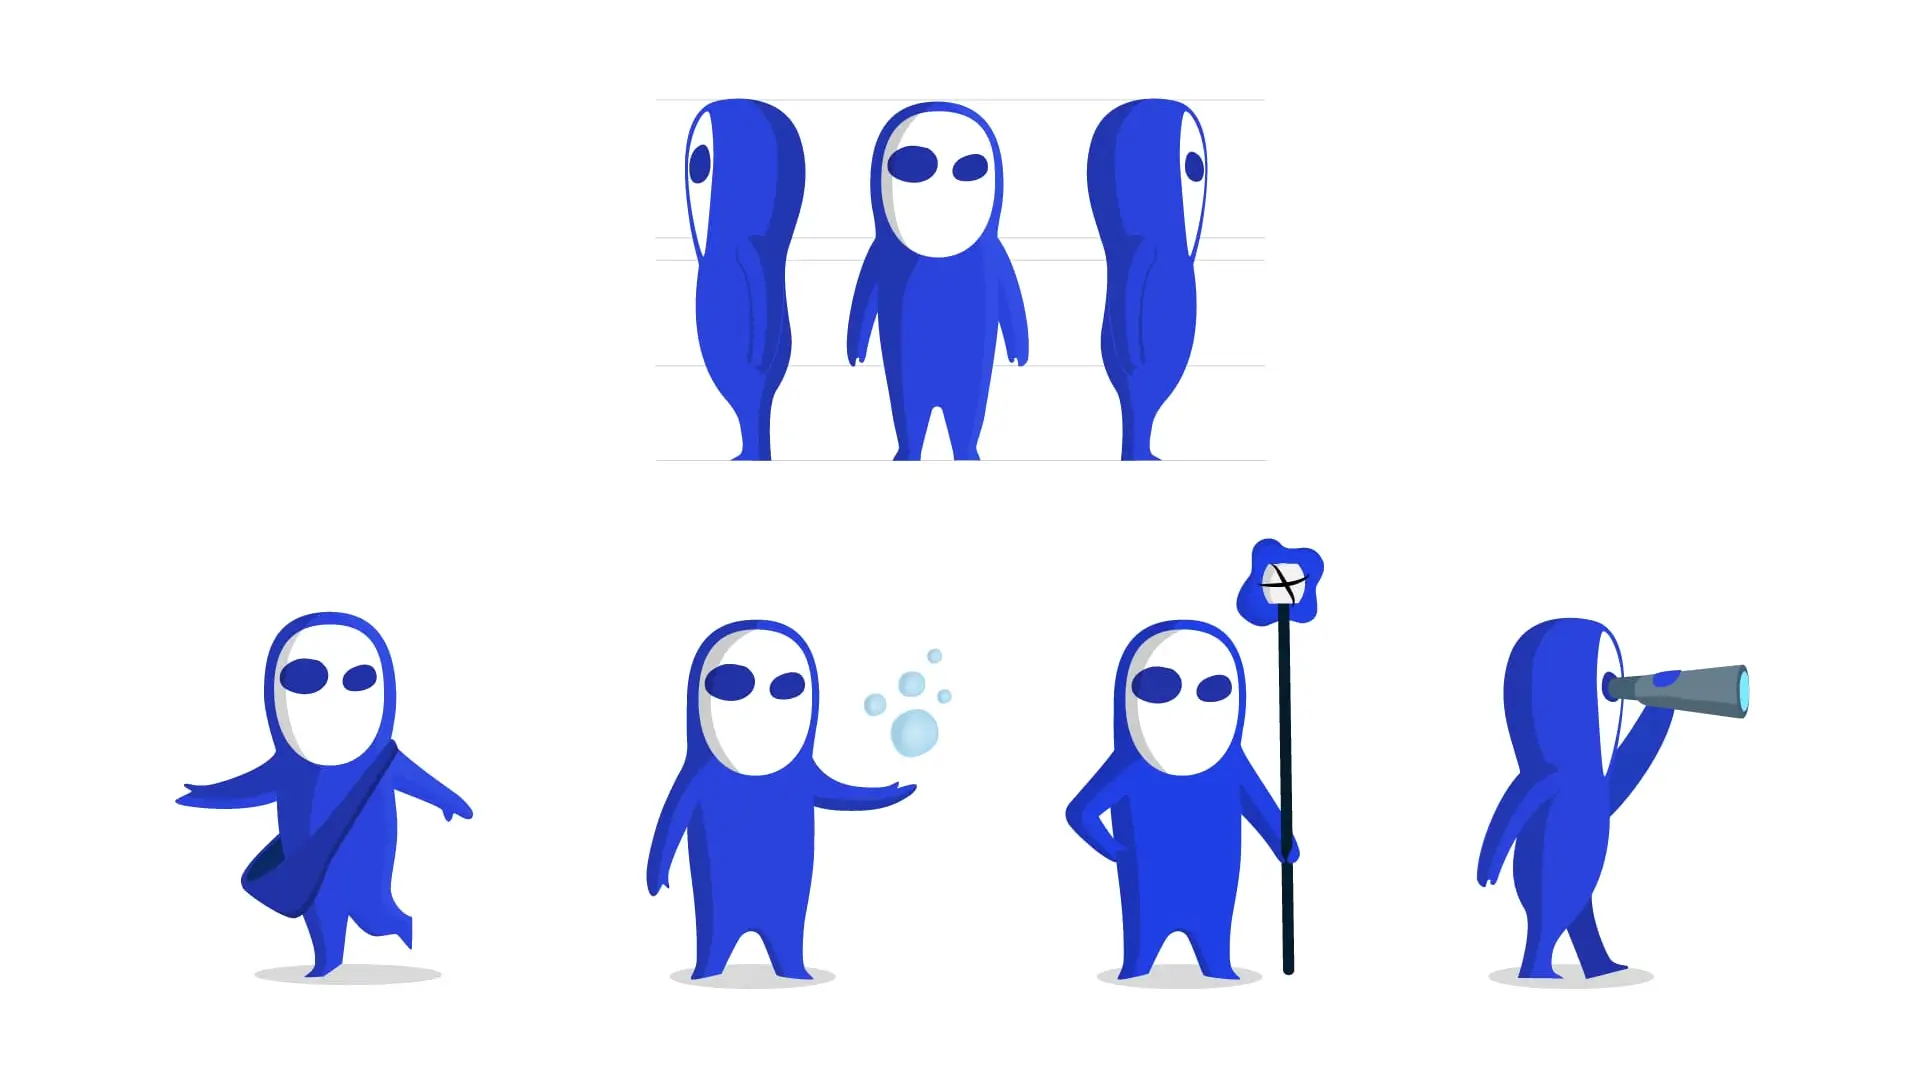 ZEW character illustrations